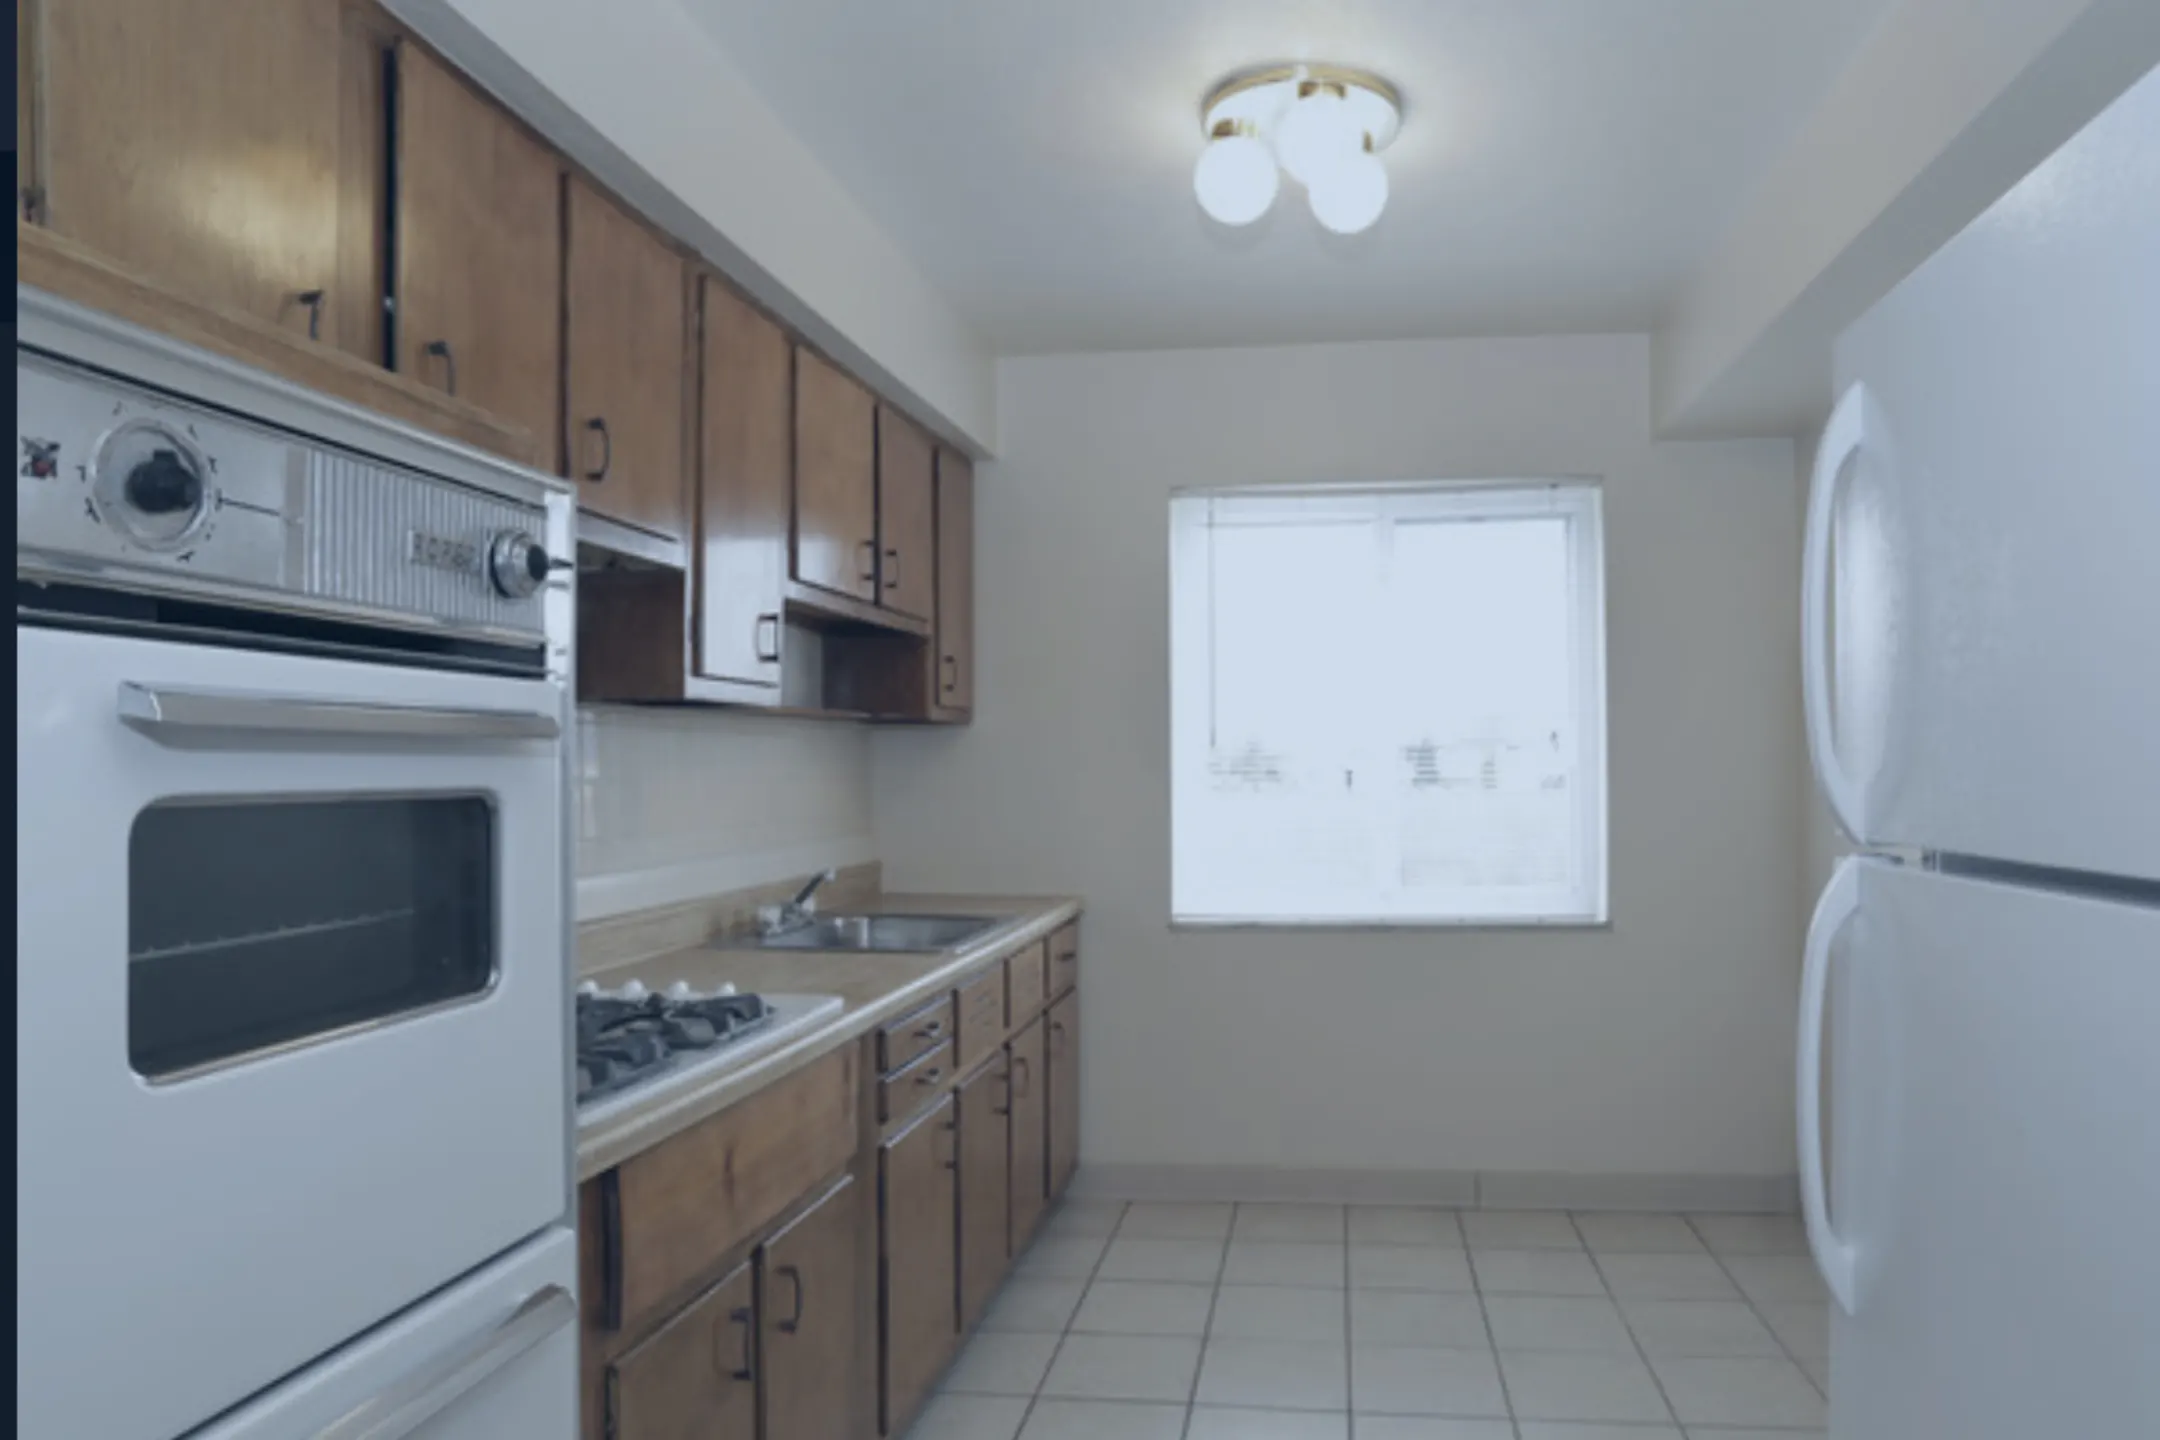 Kitchen - Stoneybrook Apartments - Bedford, OH